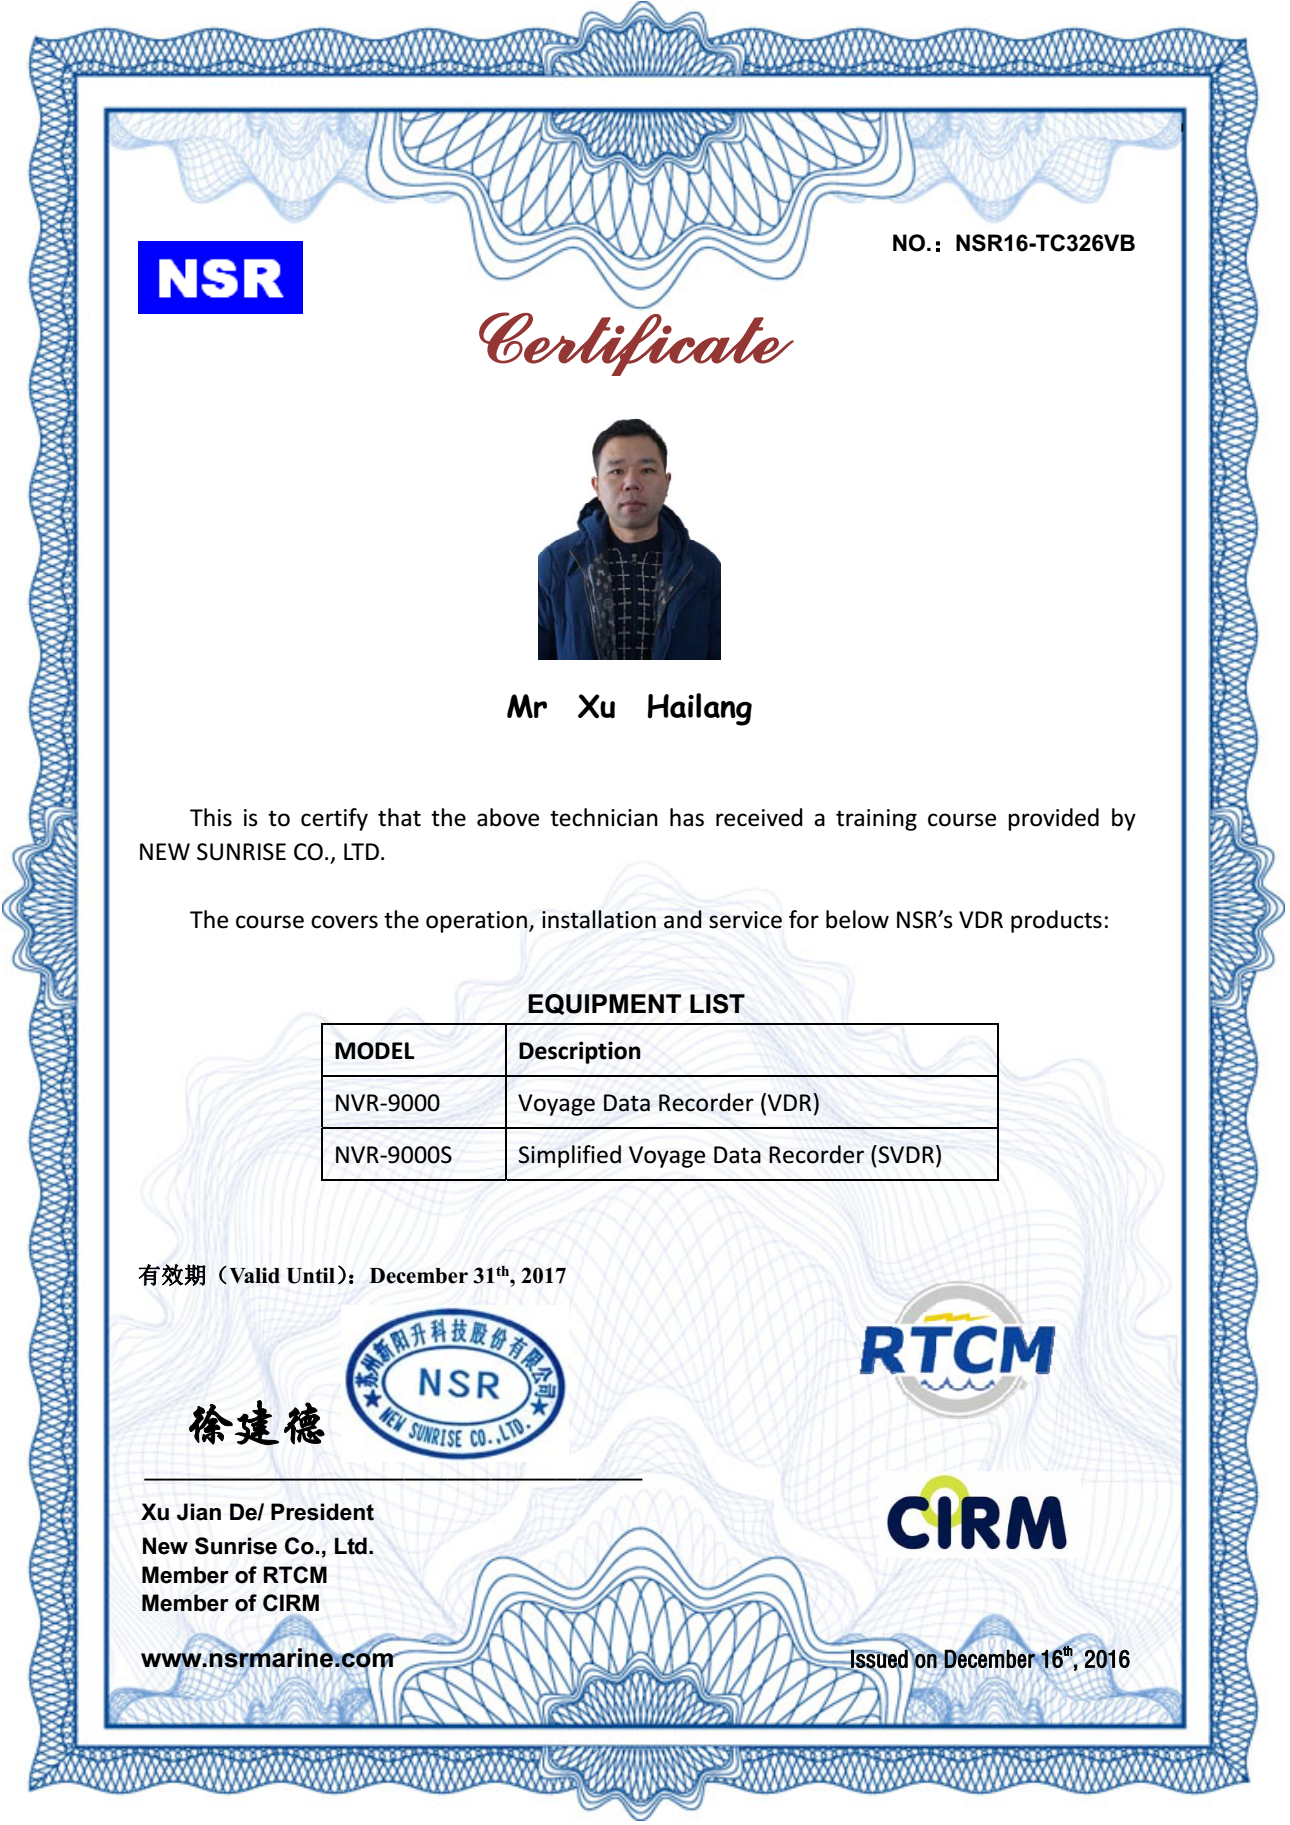 NSR Certificate